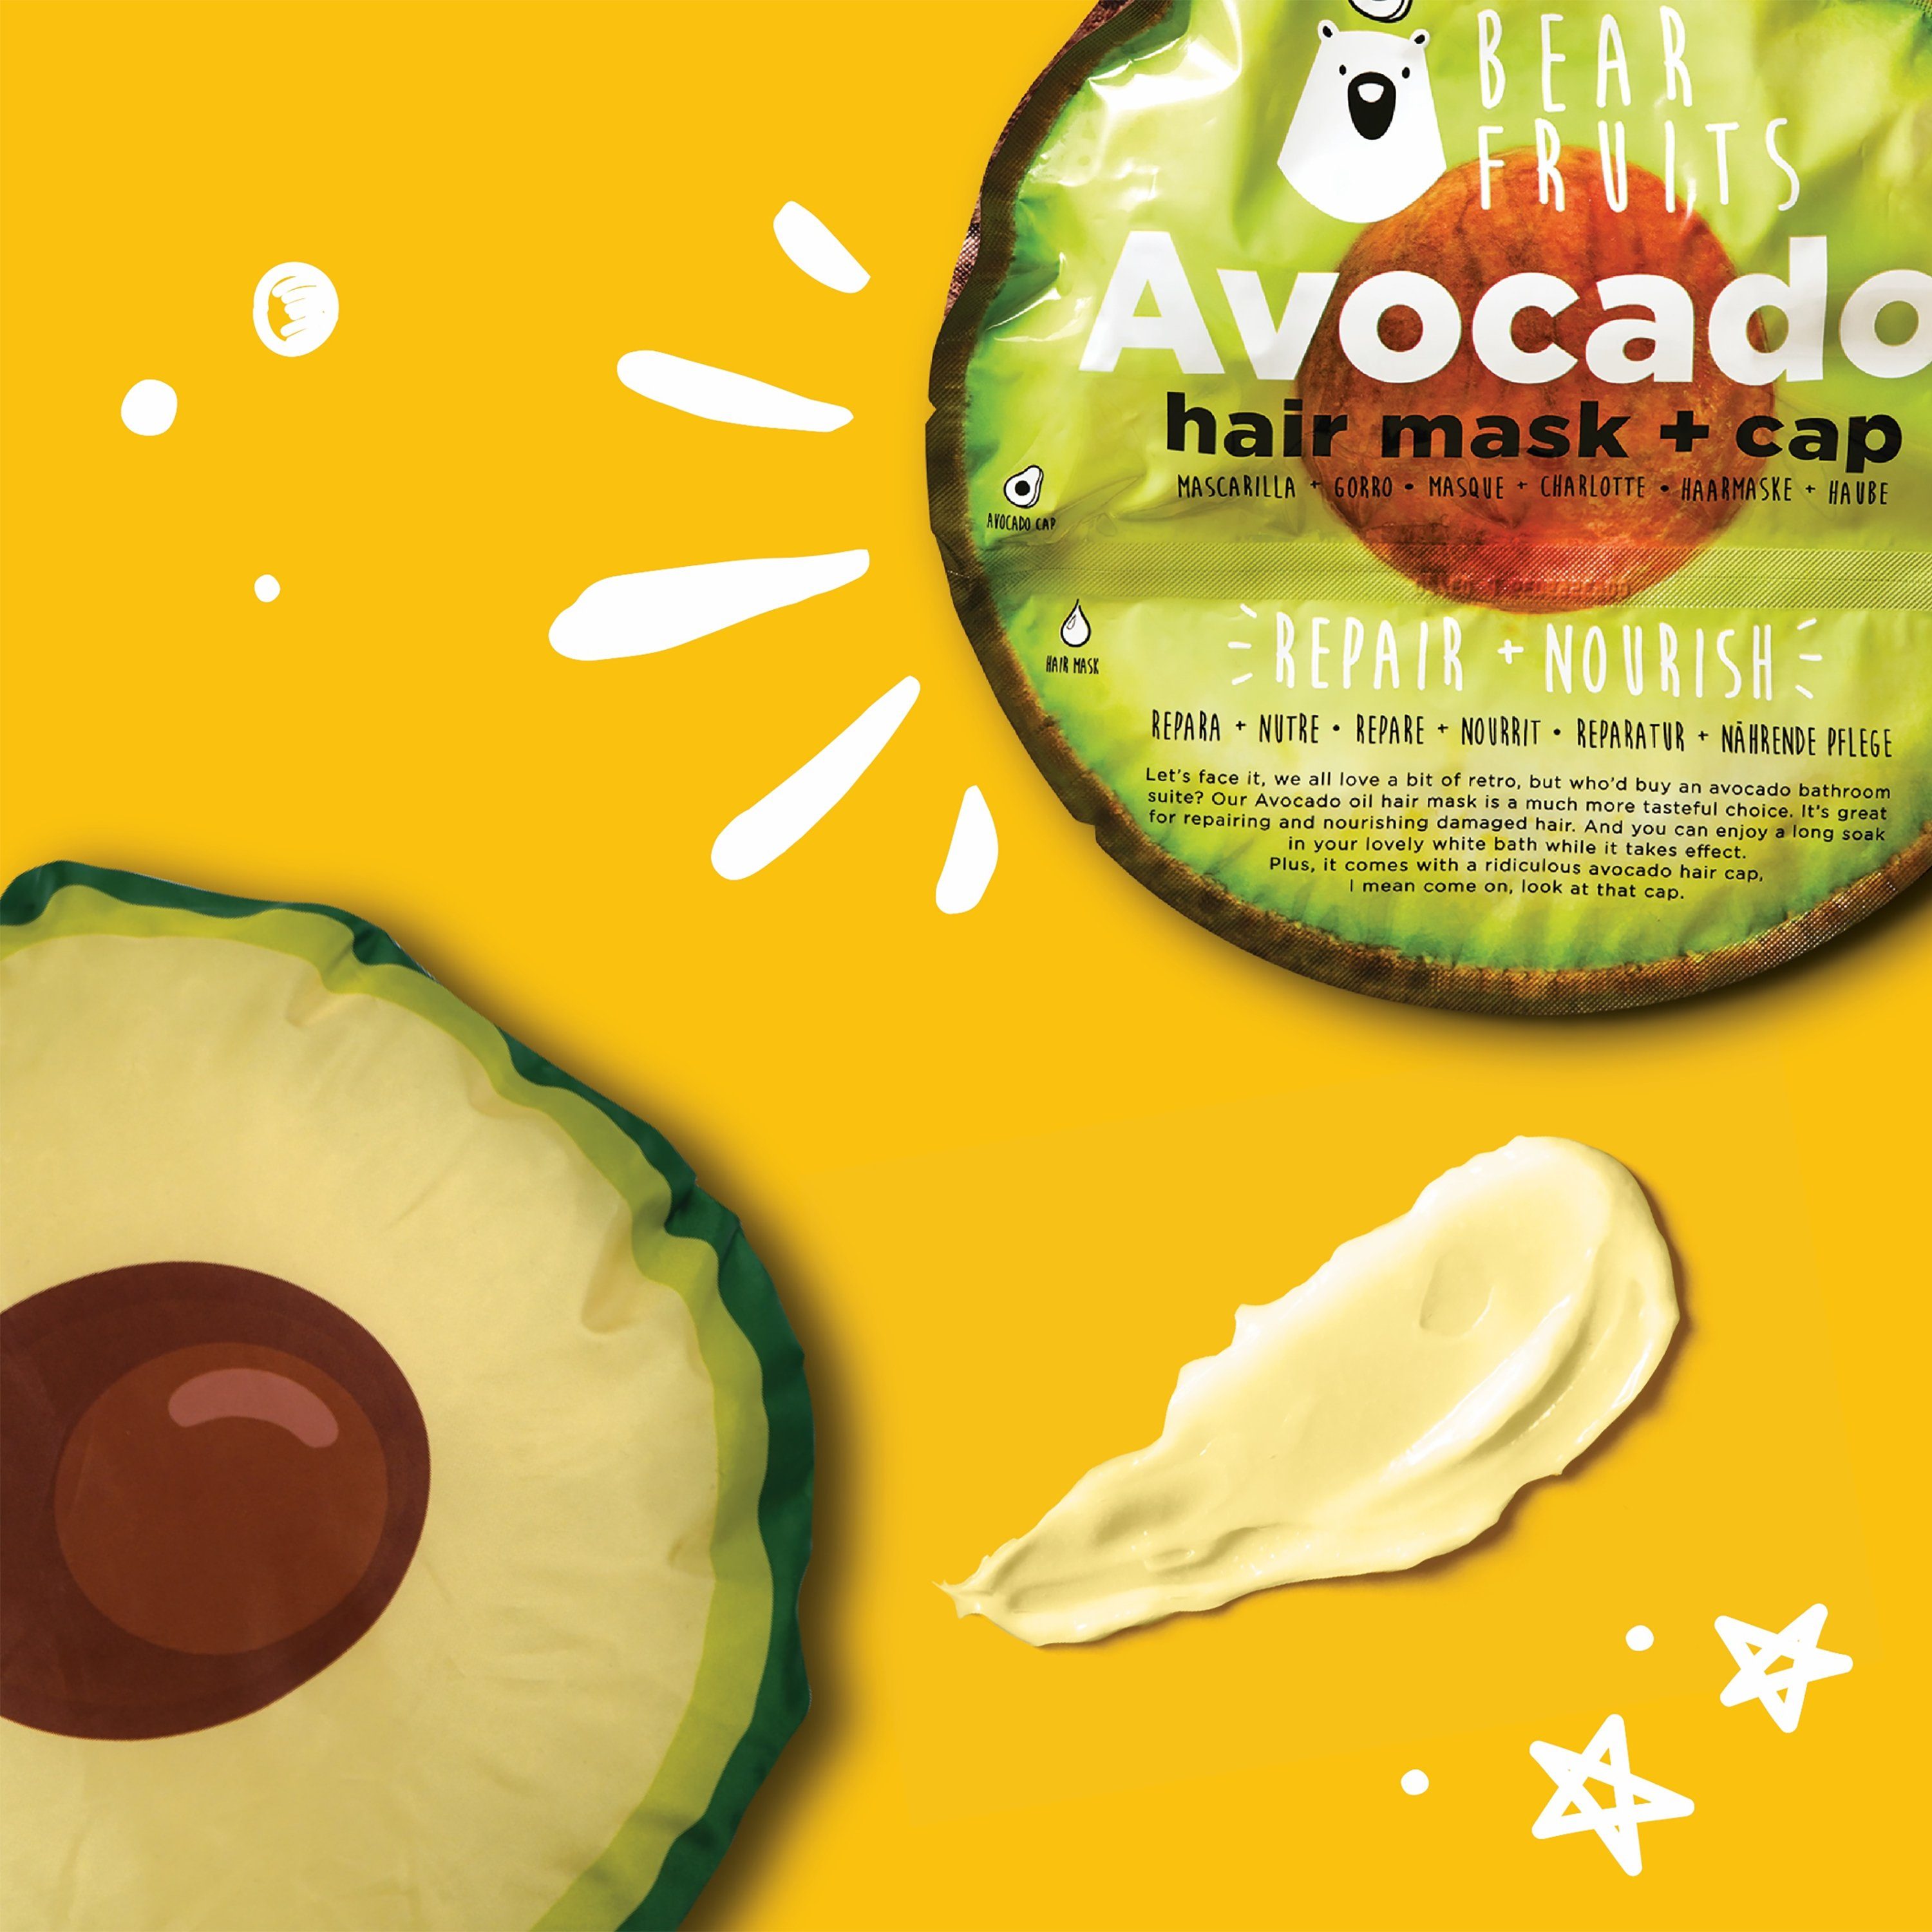 Hair Bear Avocado + - Haarkur Fruits mask cap